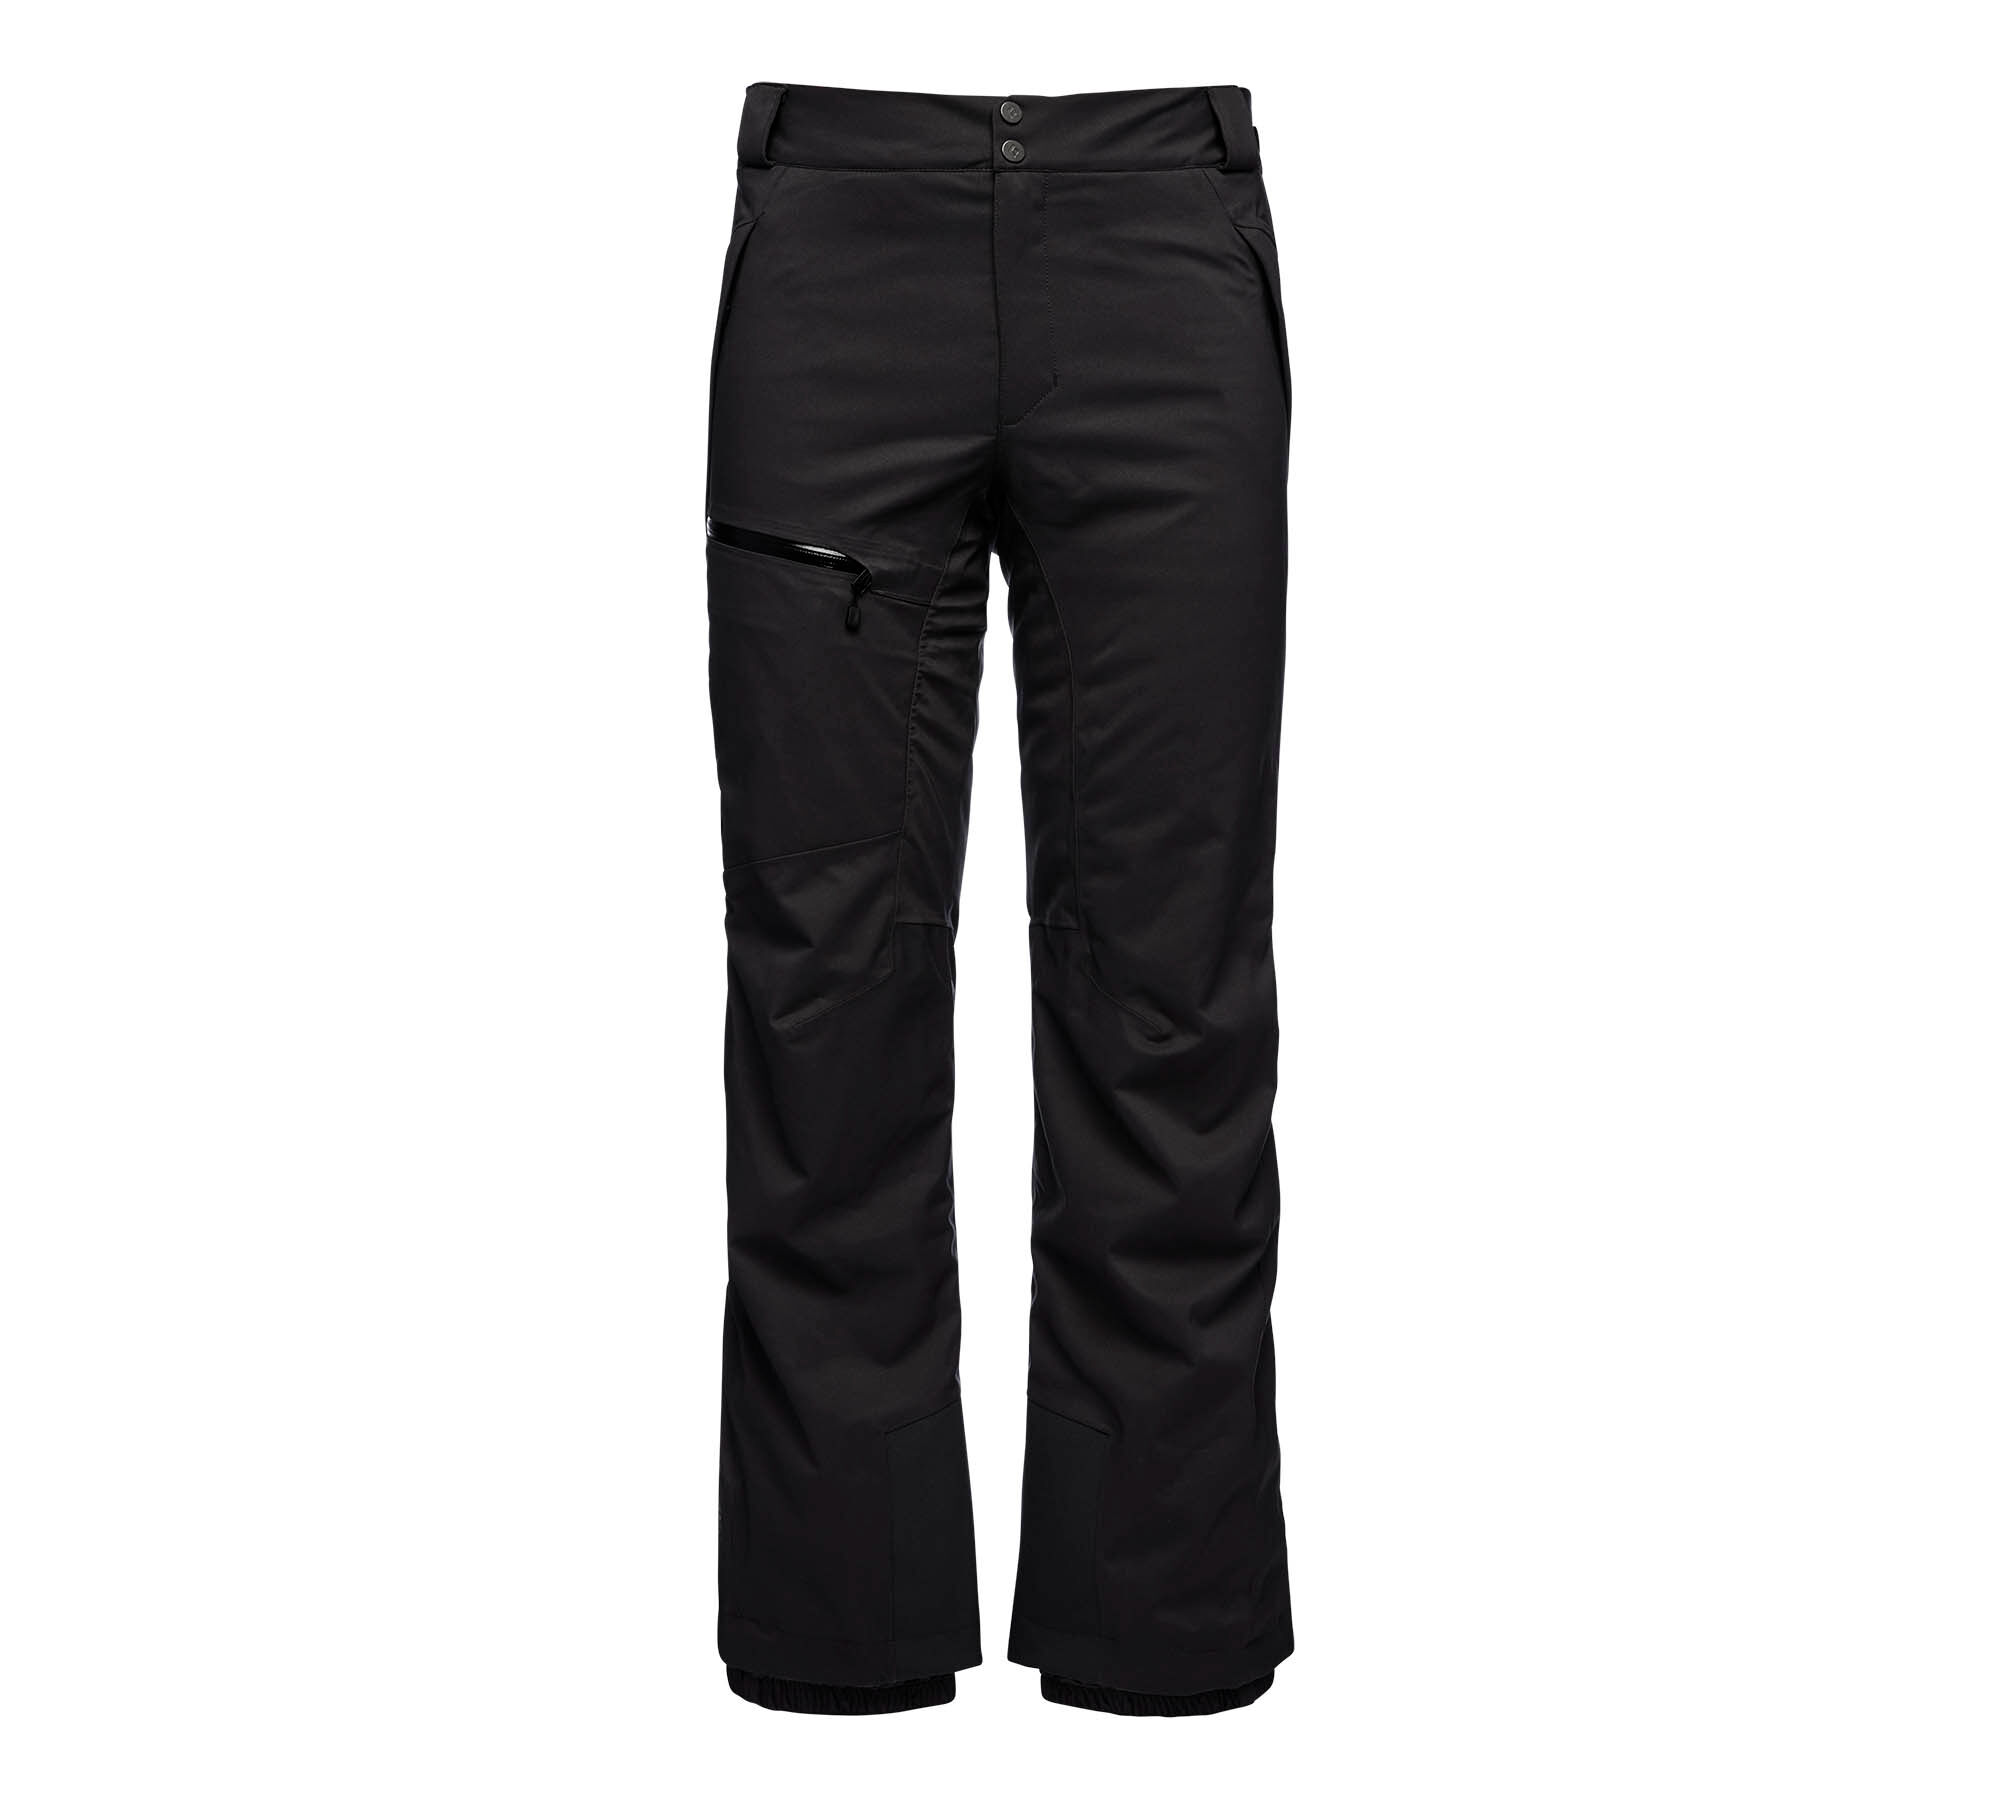 Black Diamond Boundary Line Insulated Pant - Ski trousers - Men's